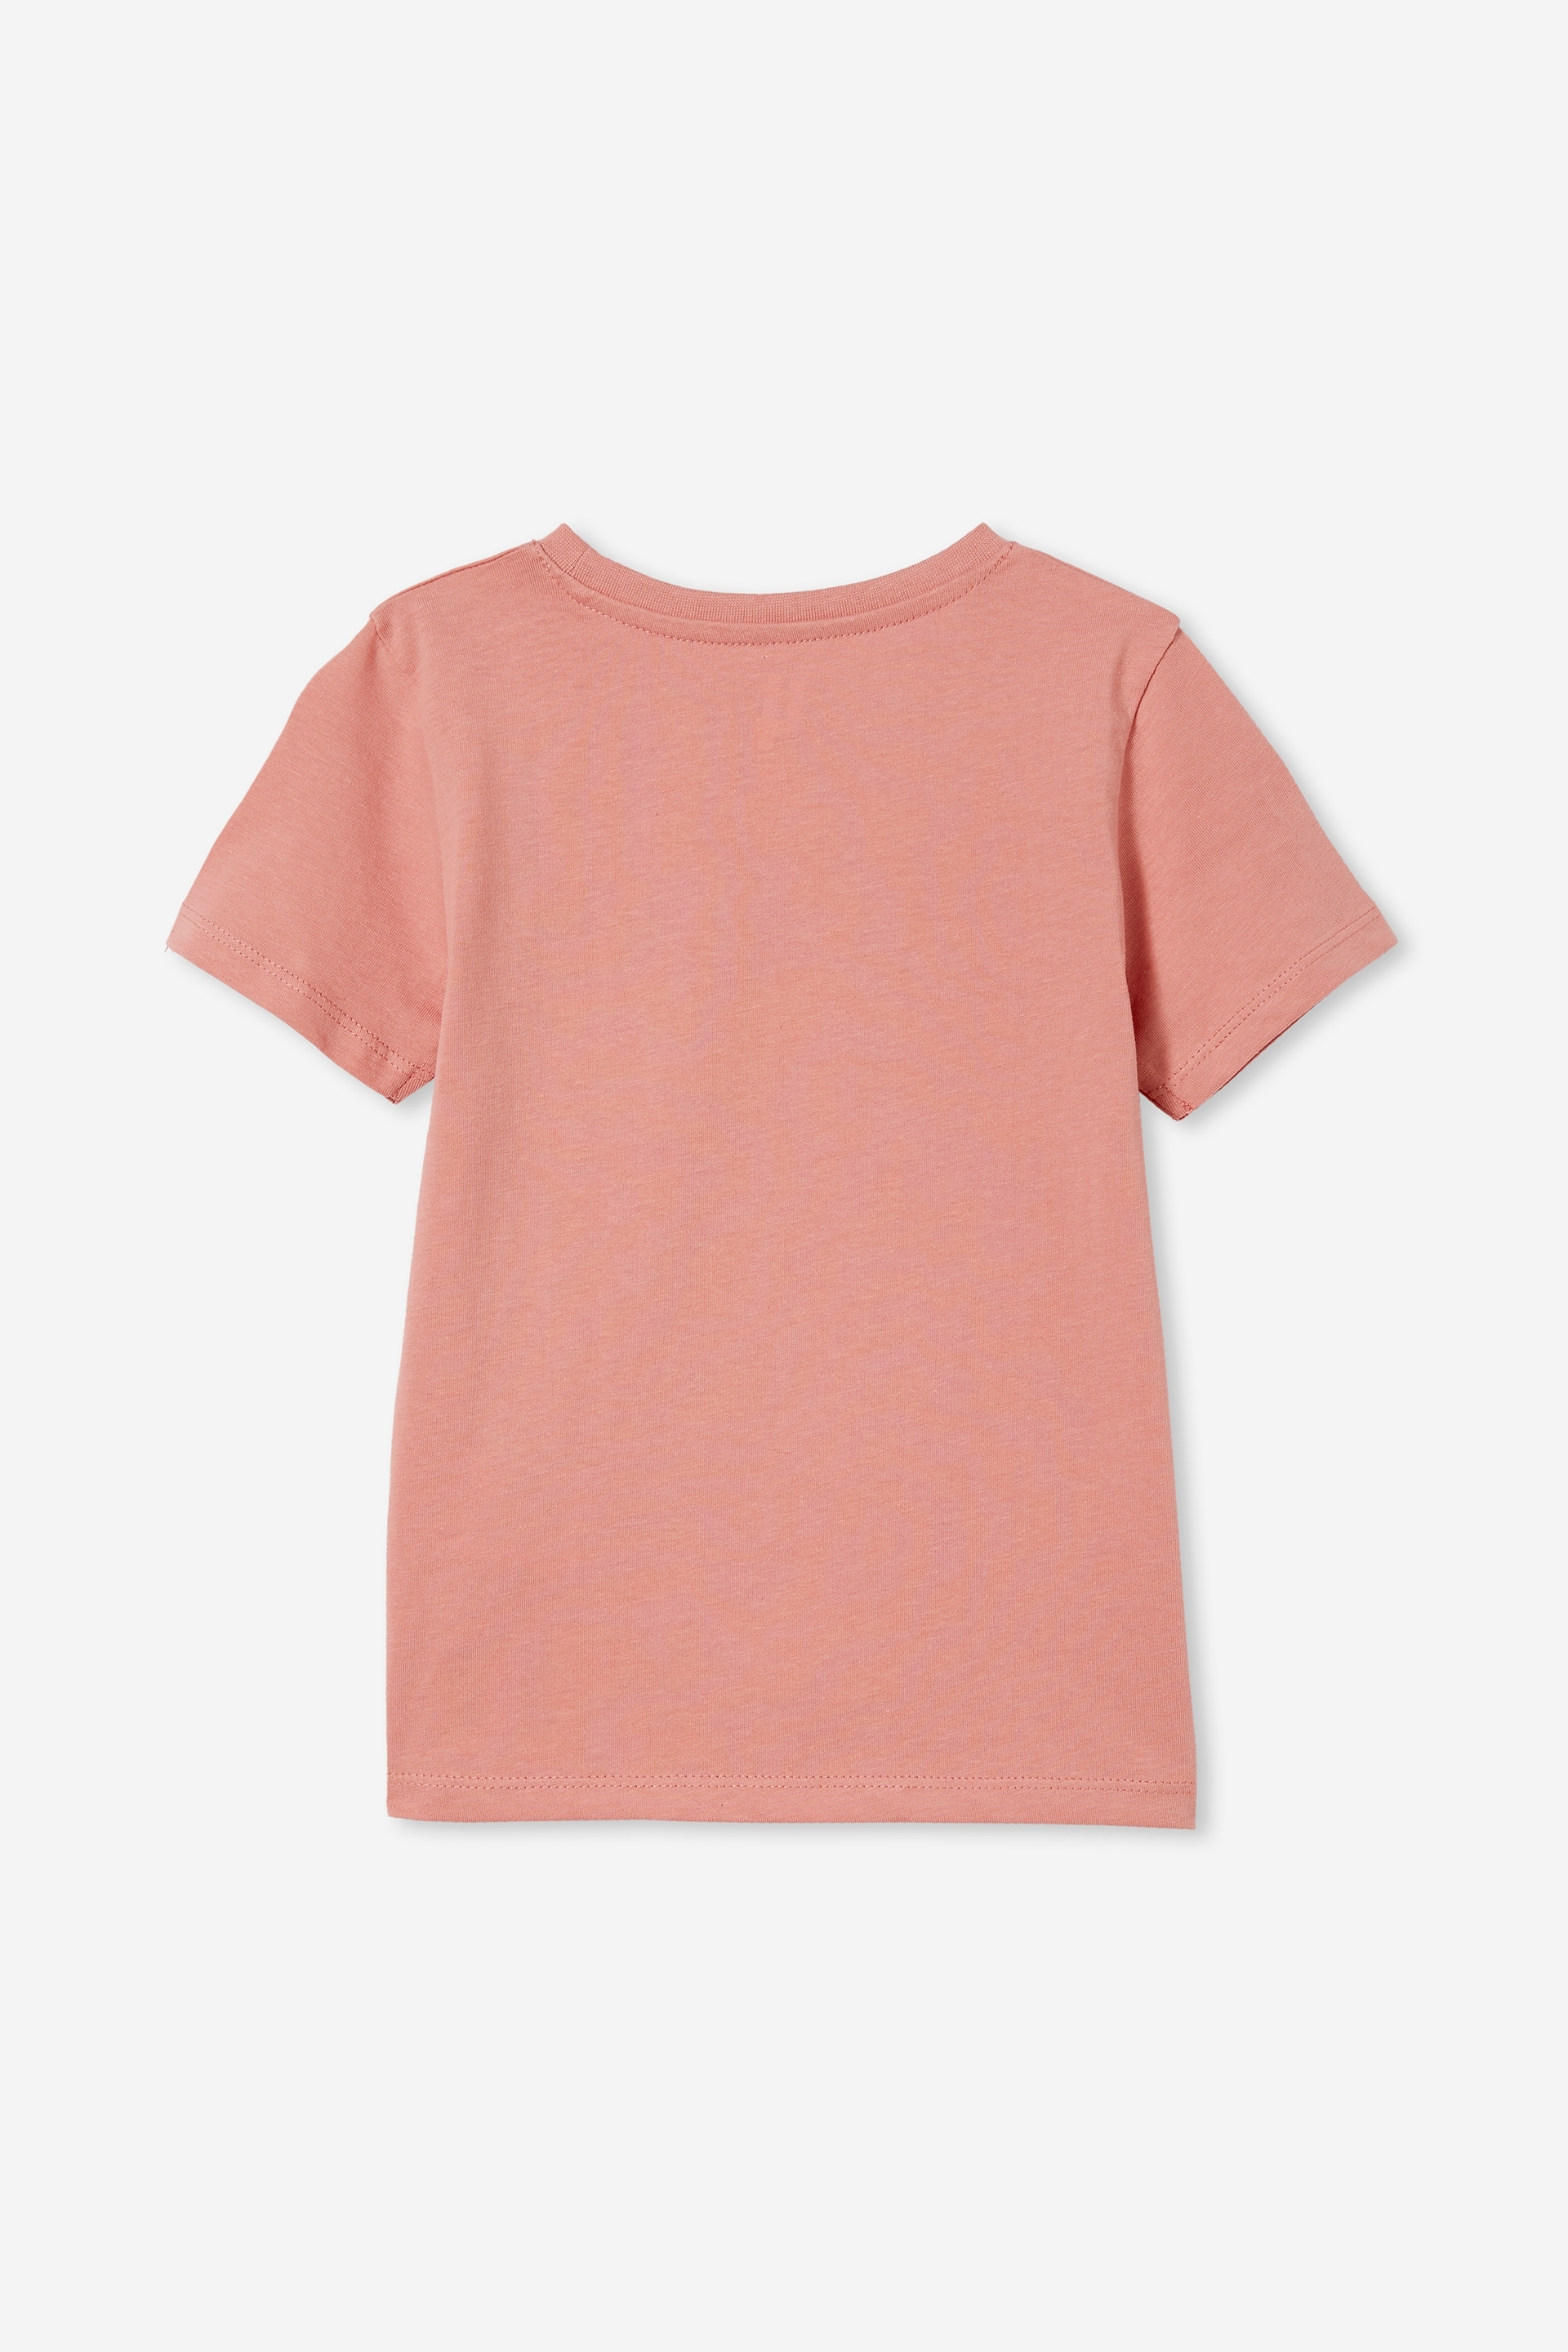 Asda Asda George Girls Pink Floral Cotton Basic T-Shirt Size 9-12 Months Crew Neck 